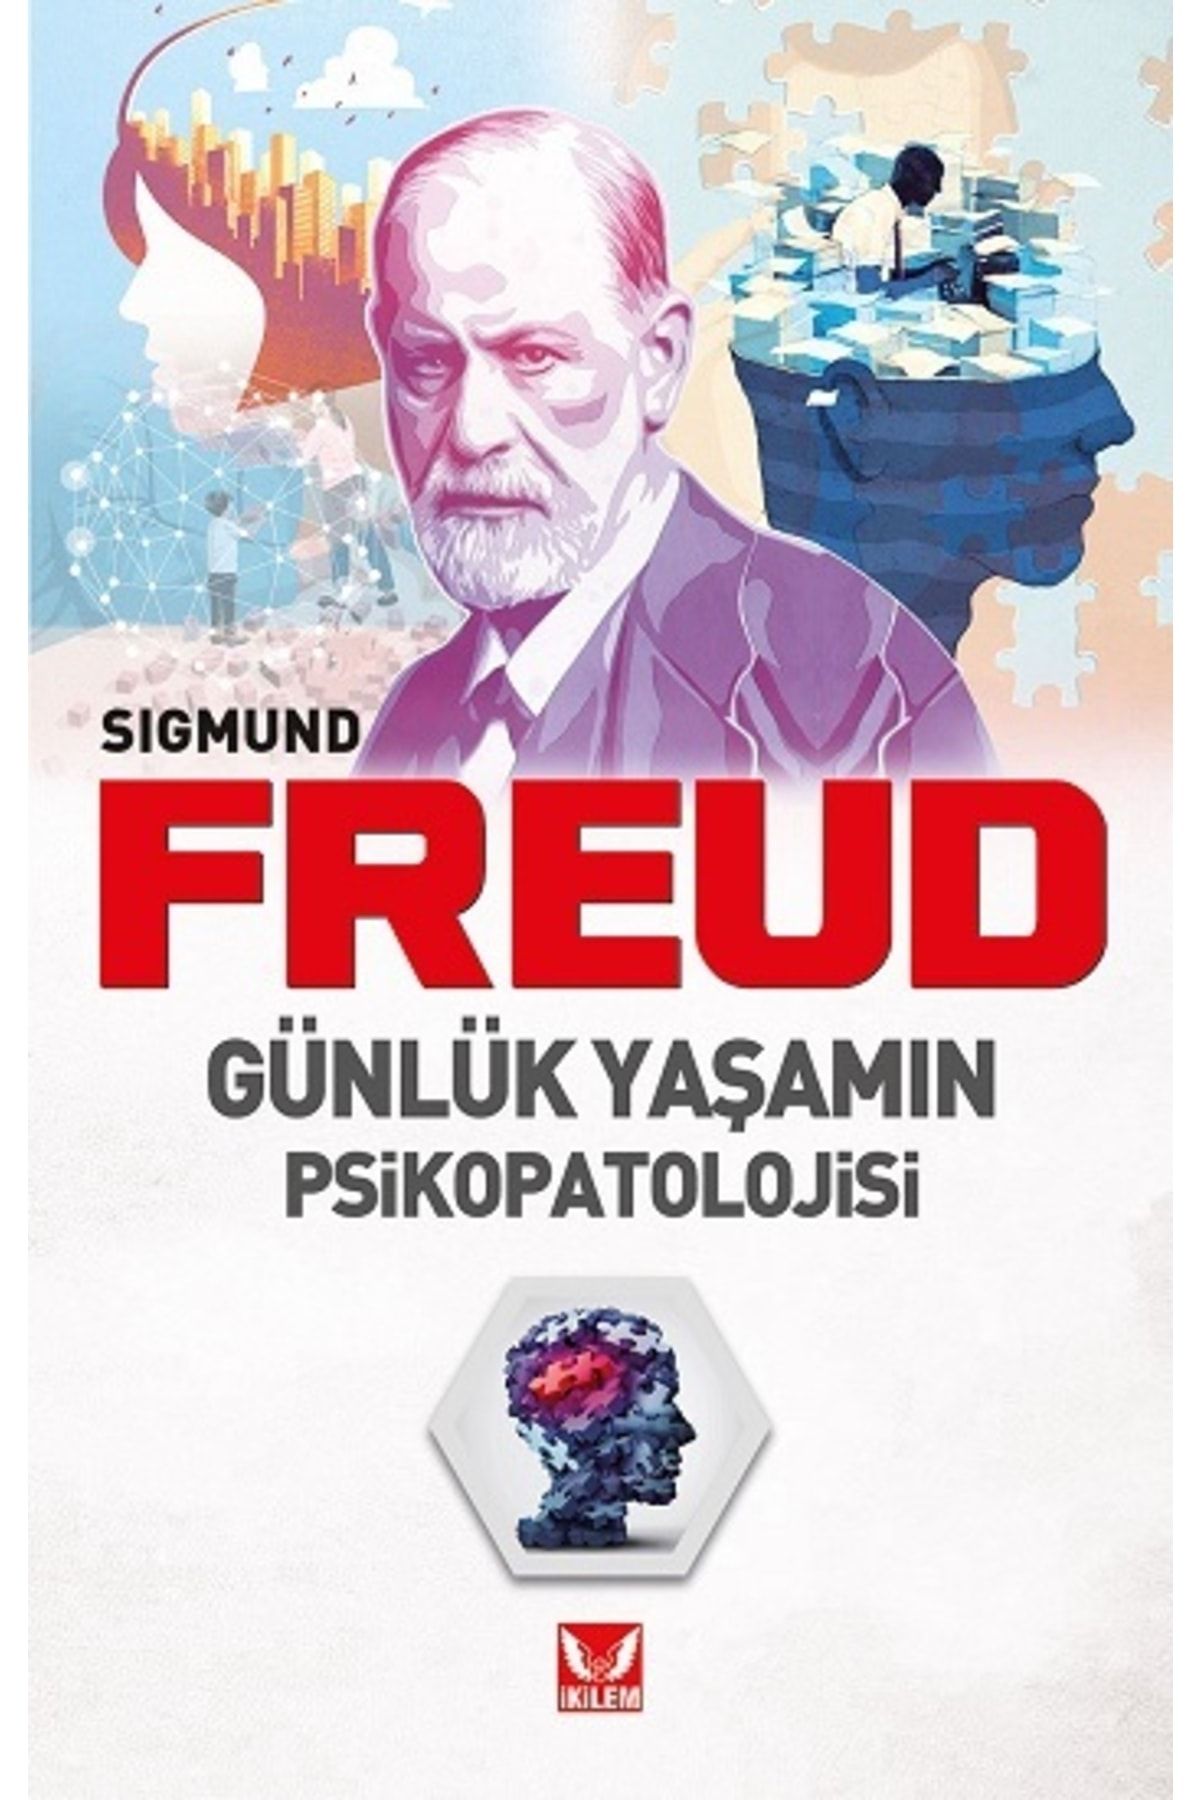 İkilem Yayınevi Günlük Yaşamın Psikopatolojisi /sigmund Freud /